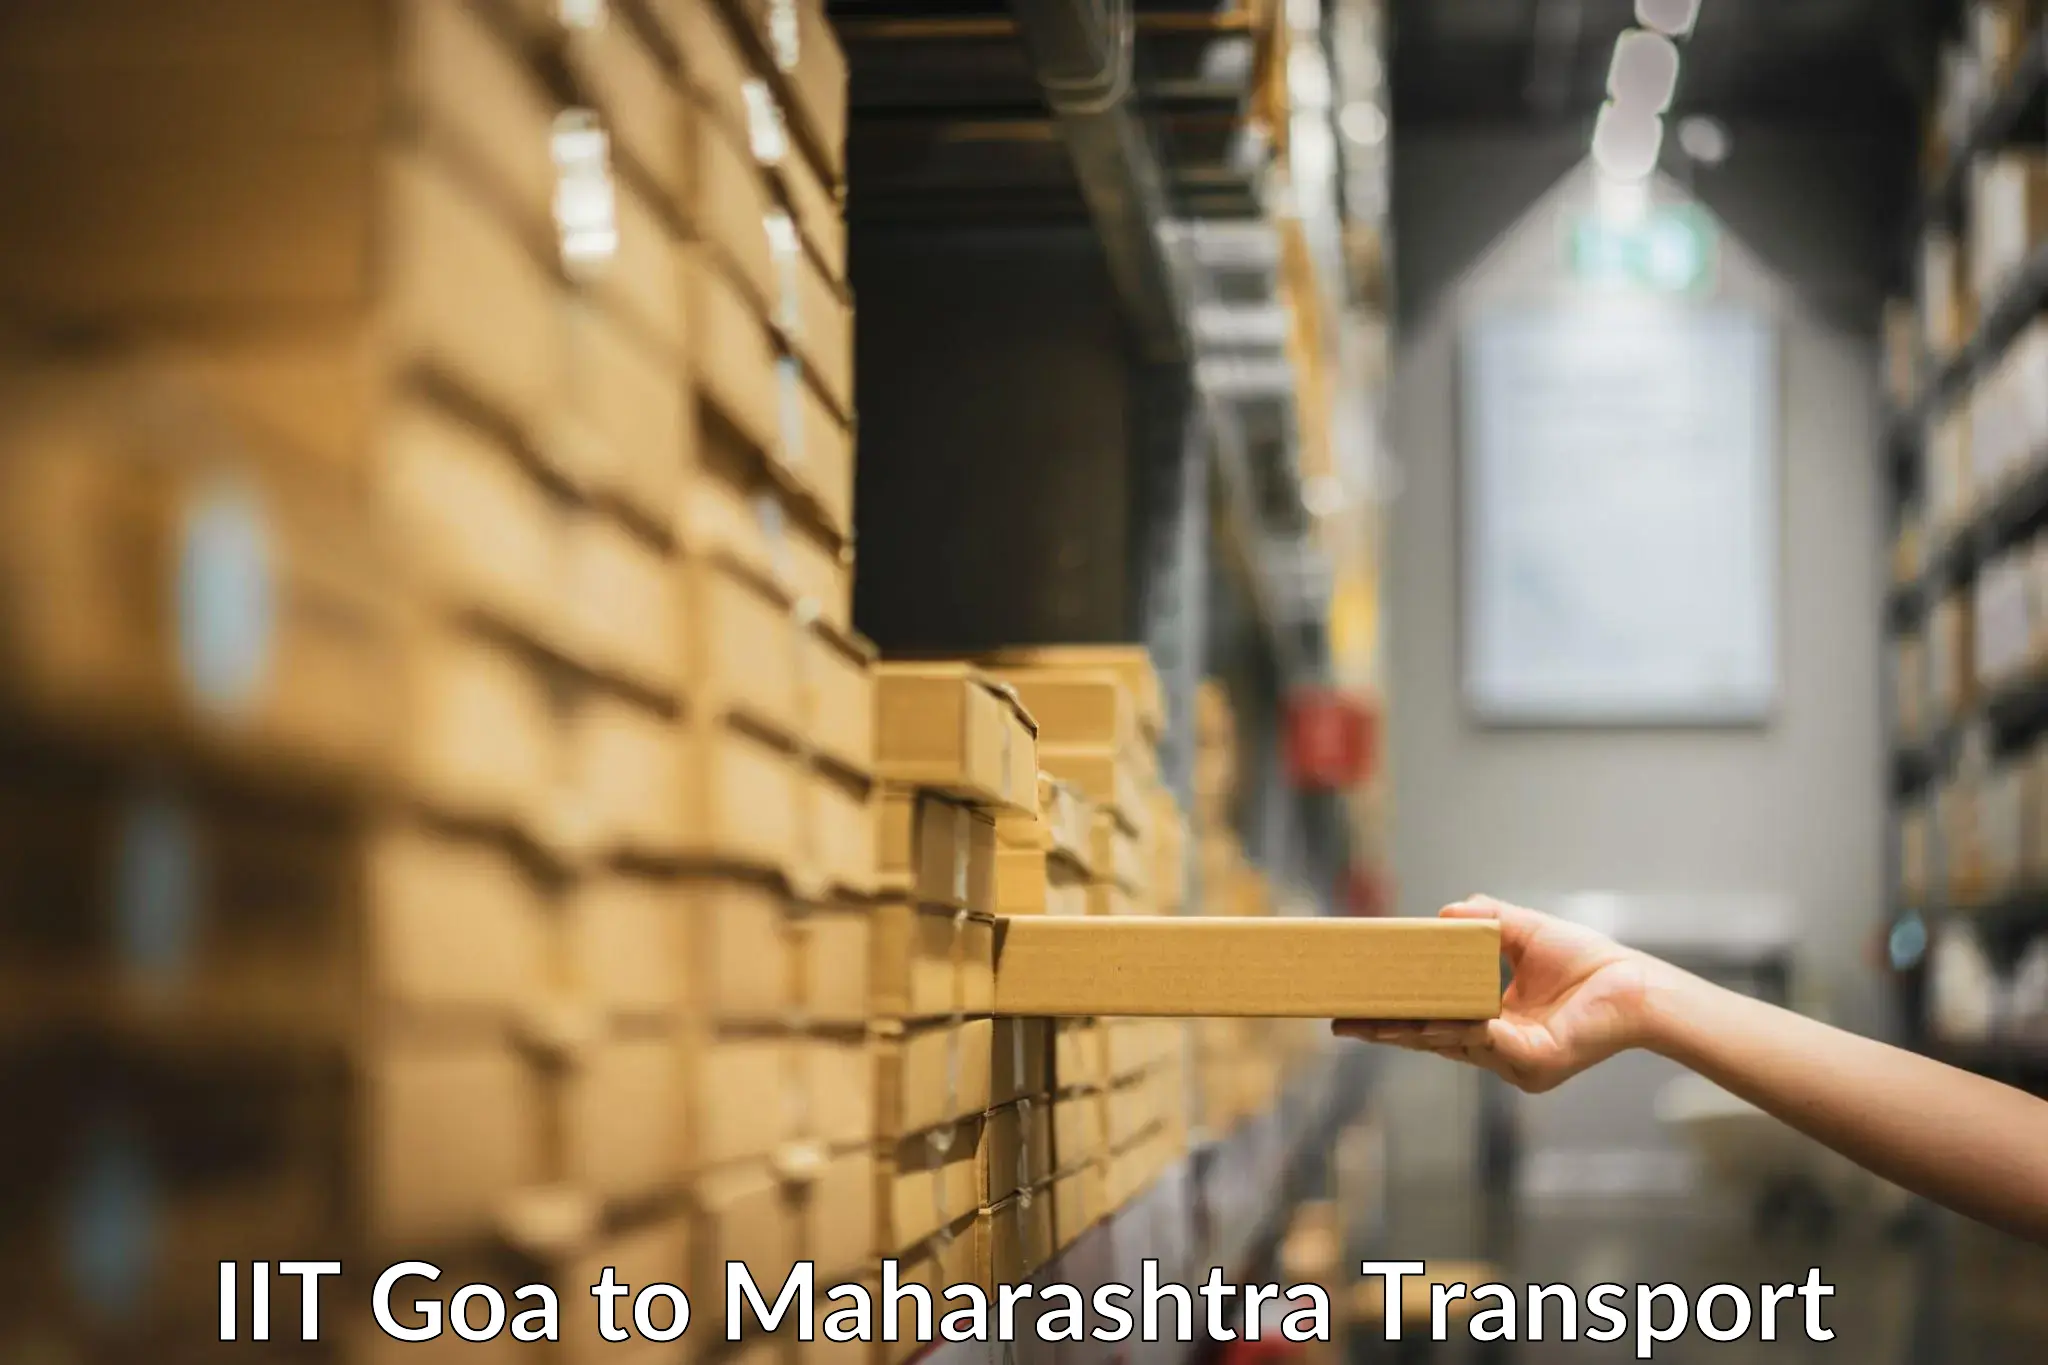 Online transport in IIT Goa to Mumbai Port